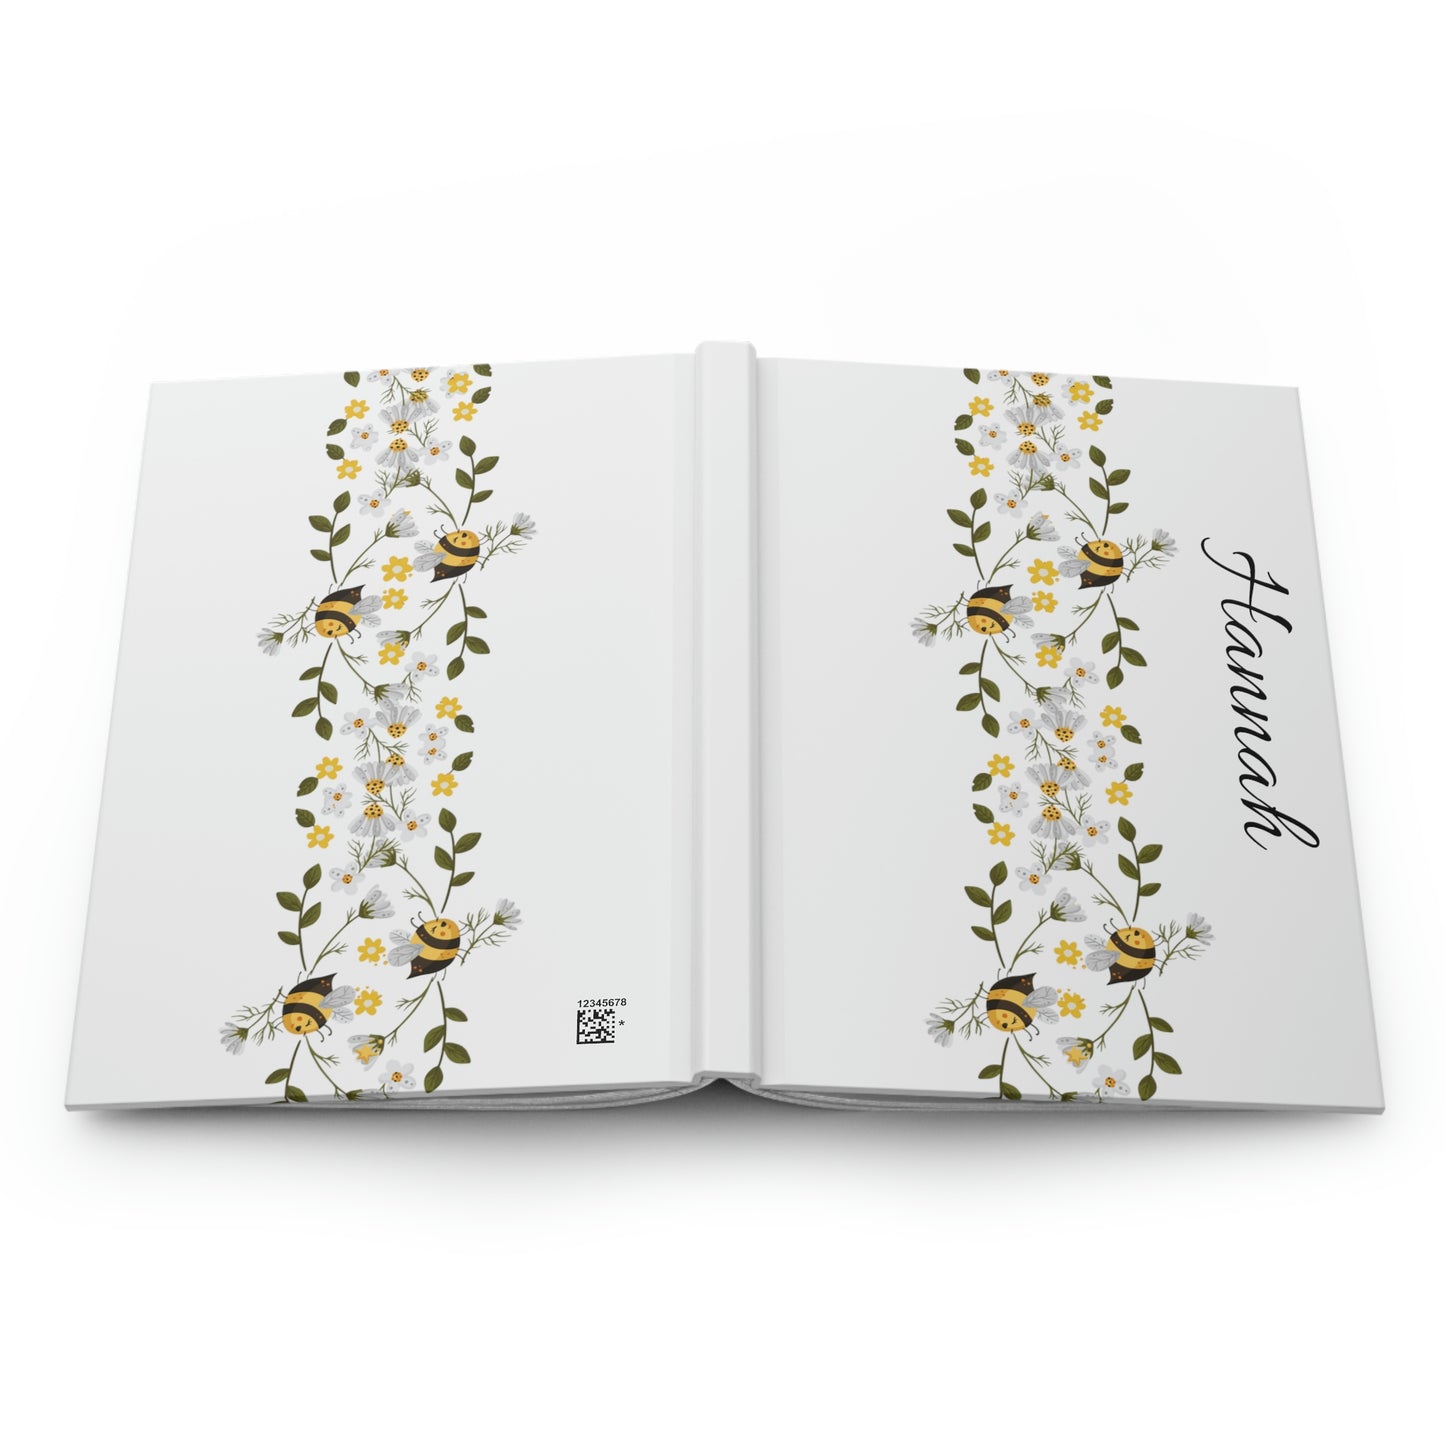 Personalized Honey Bee Journal / Bee Notebook